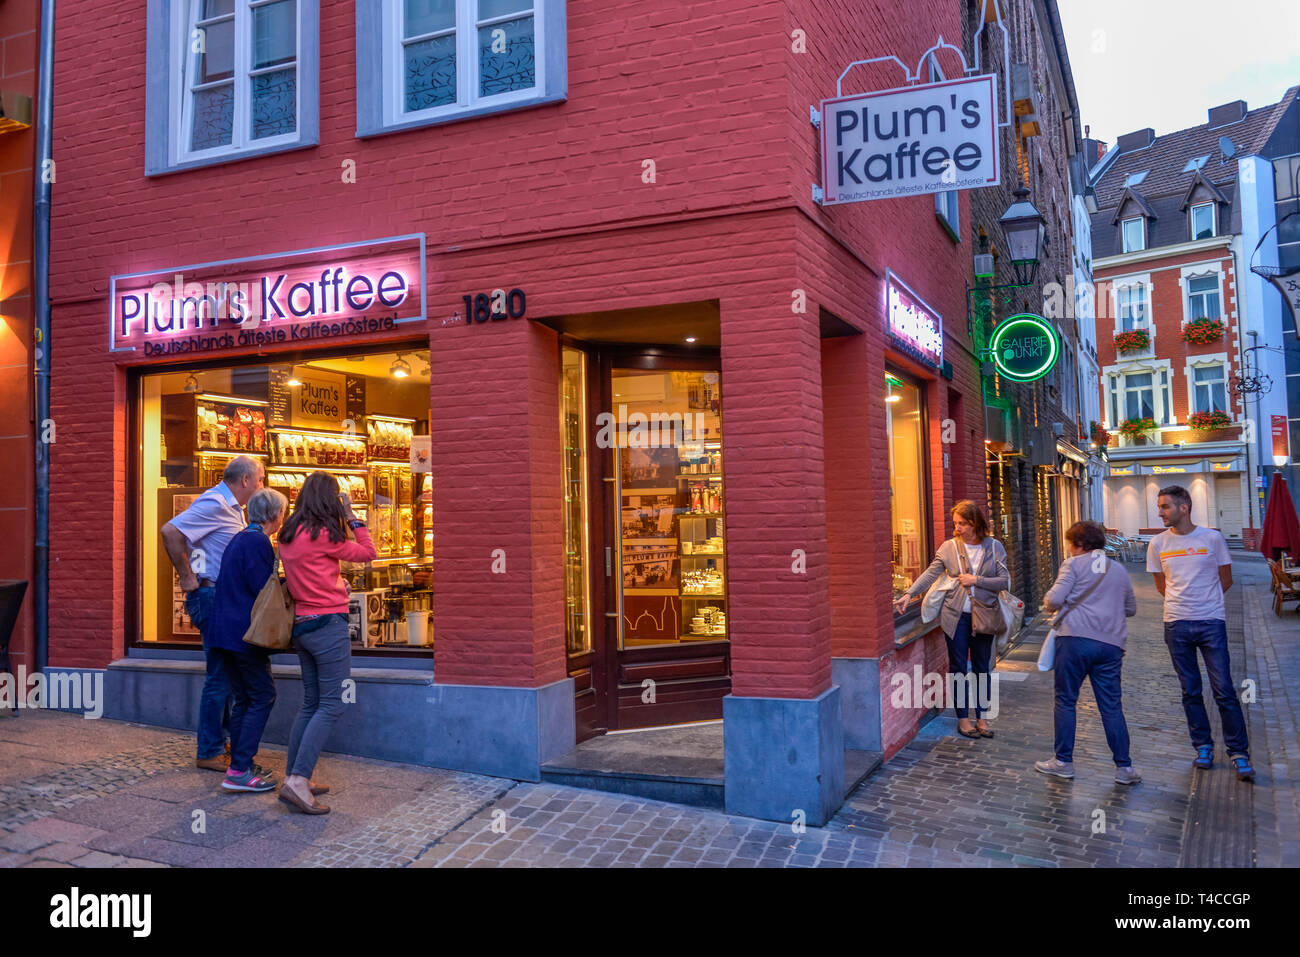 Plum's Kaffee, Koerbergasse, Altstadt, Aachen, Nordrhein-Westfalen, Deutschland Stock Photo